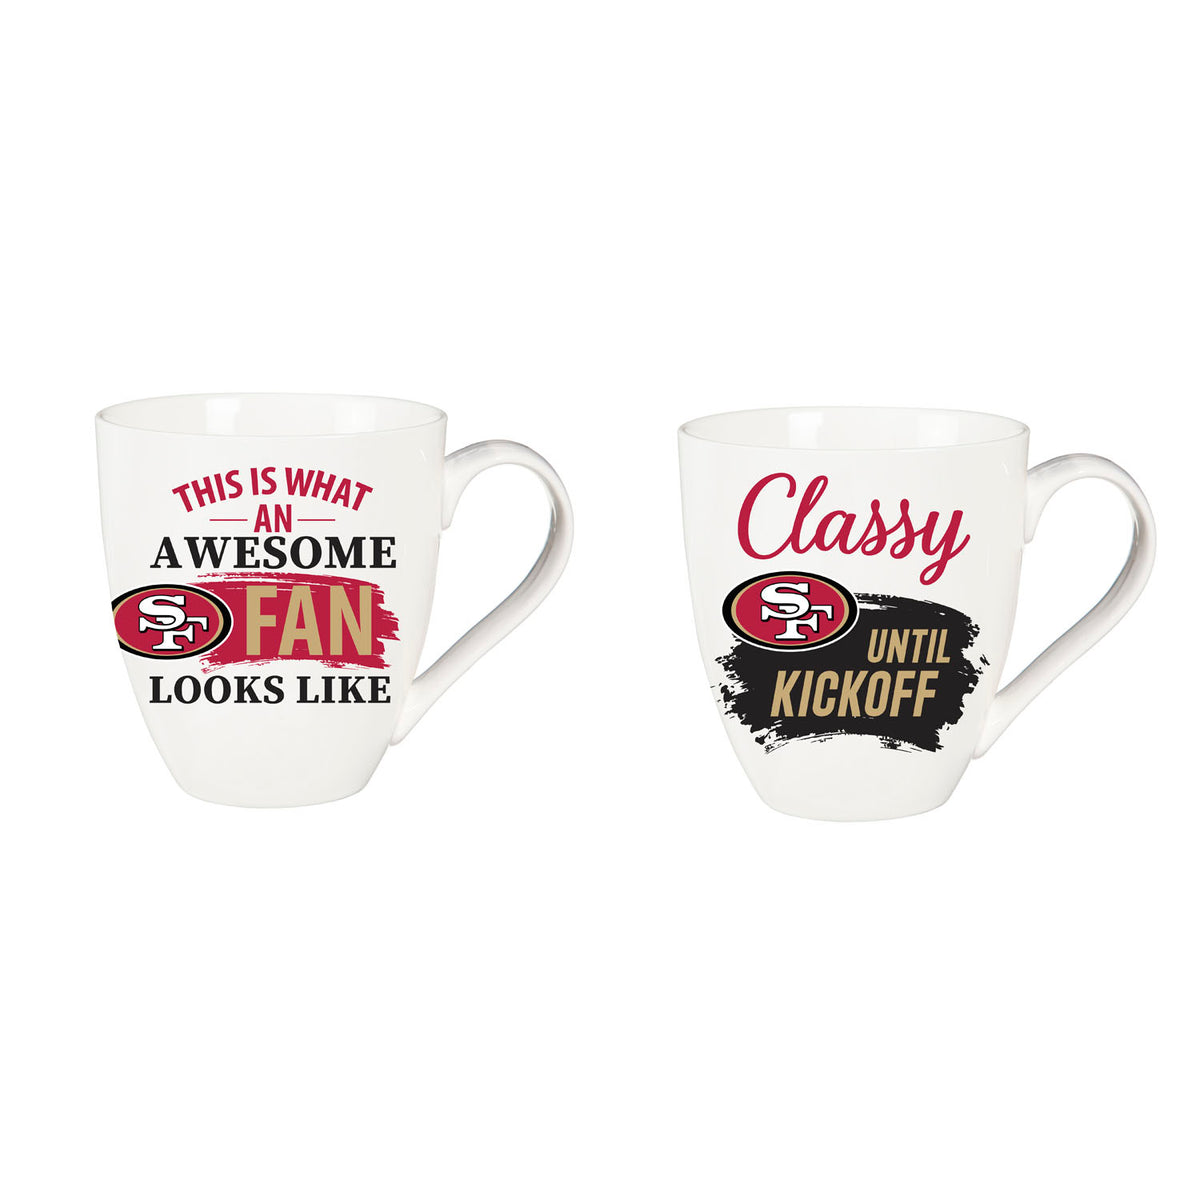 San Francisco 49ers 14oz. Ceramic Mug with Matching Box